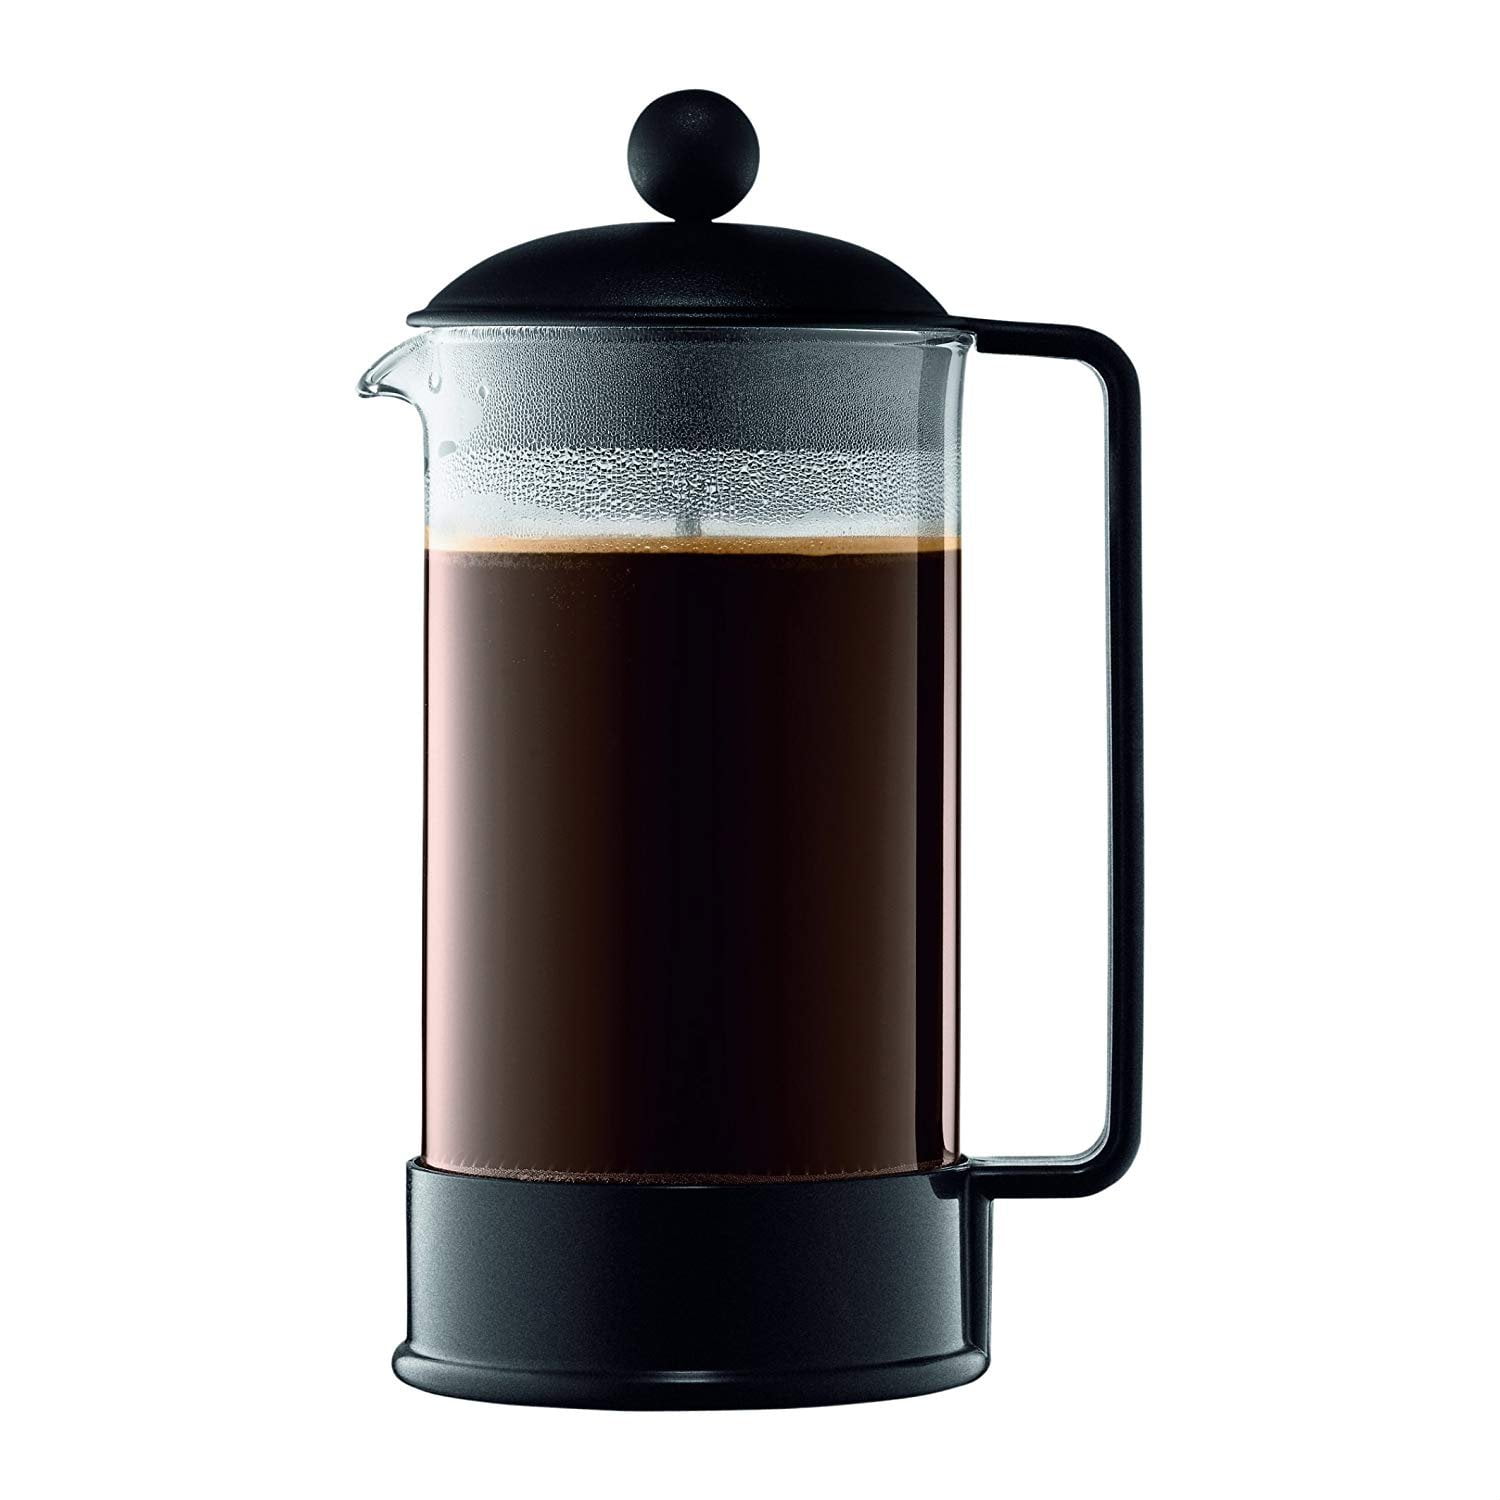 Bodum Brazil French Press Coffee Maker, 51 oz, Black